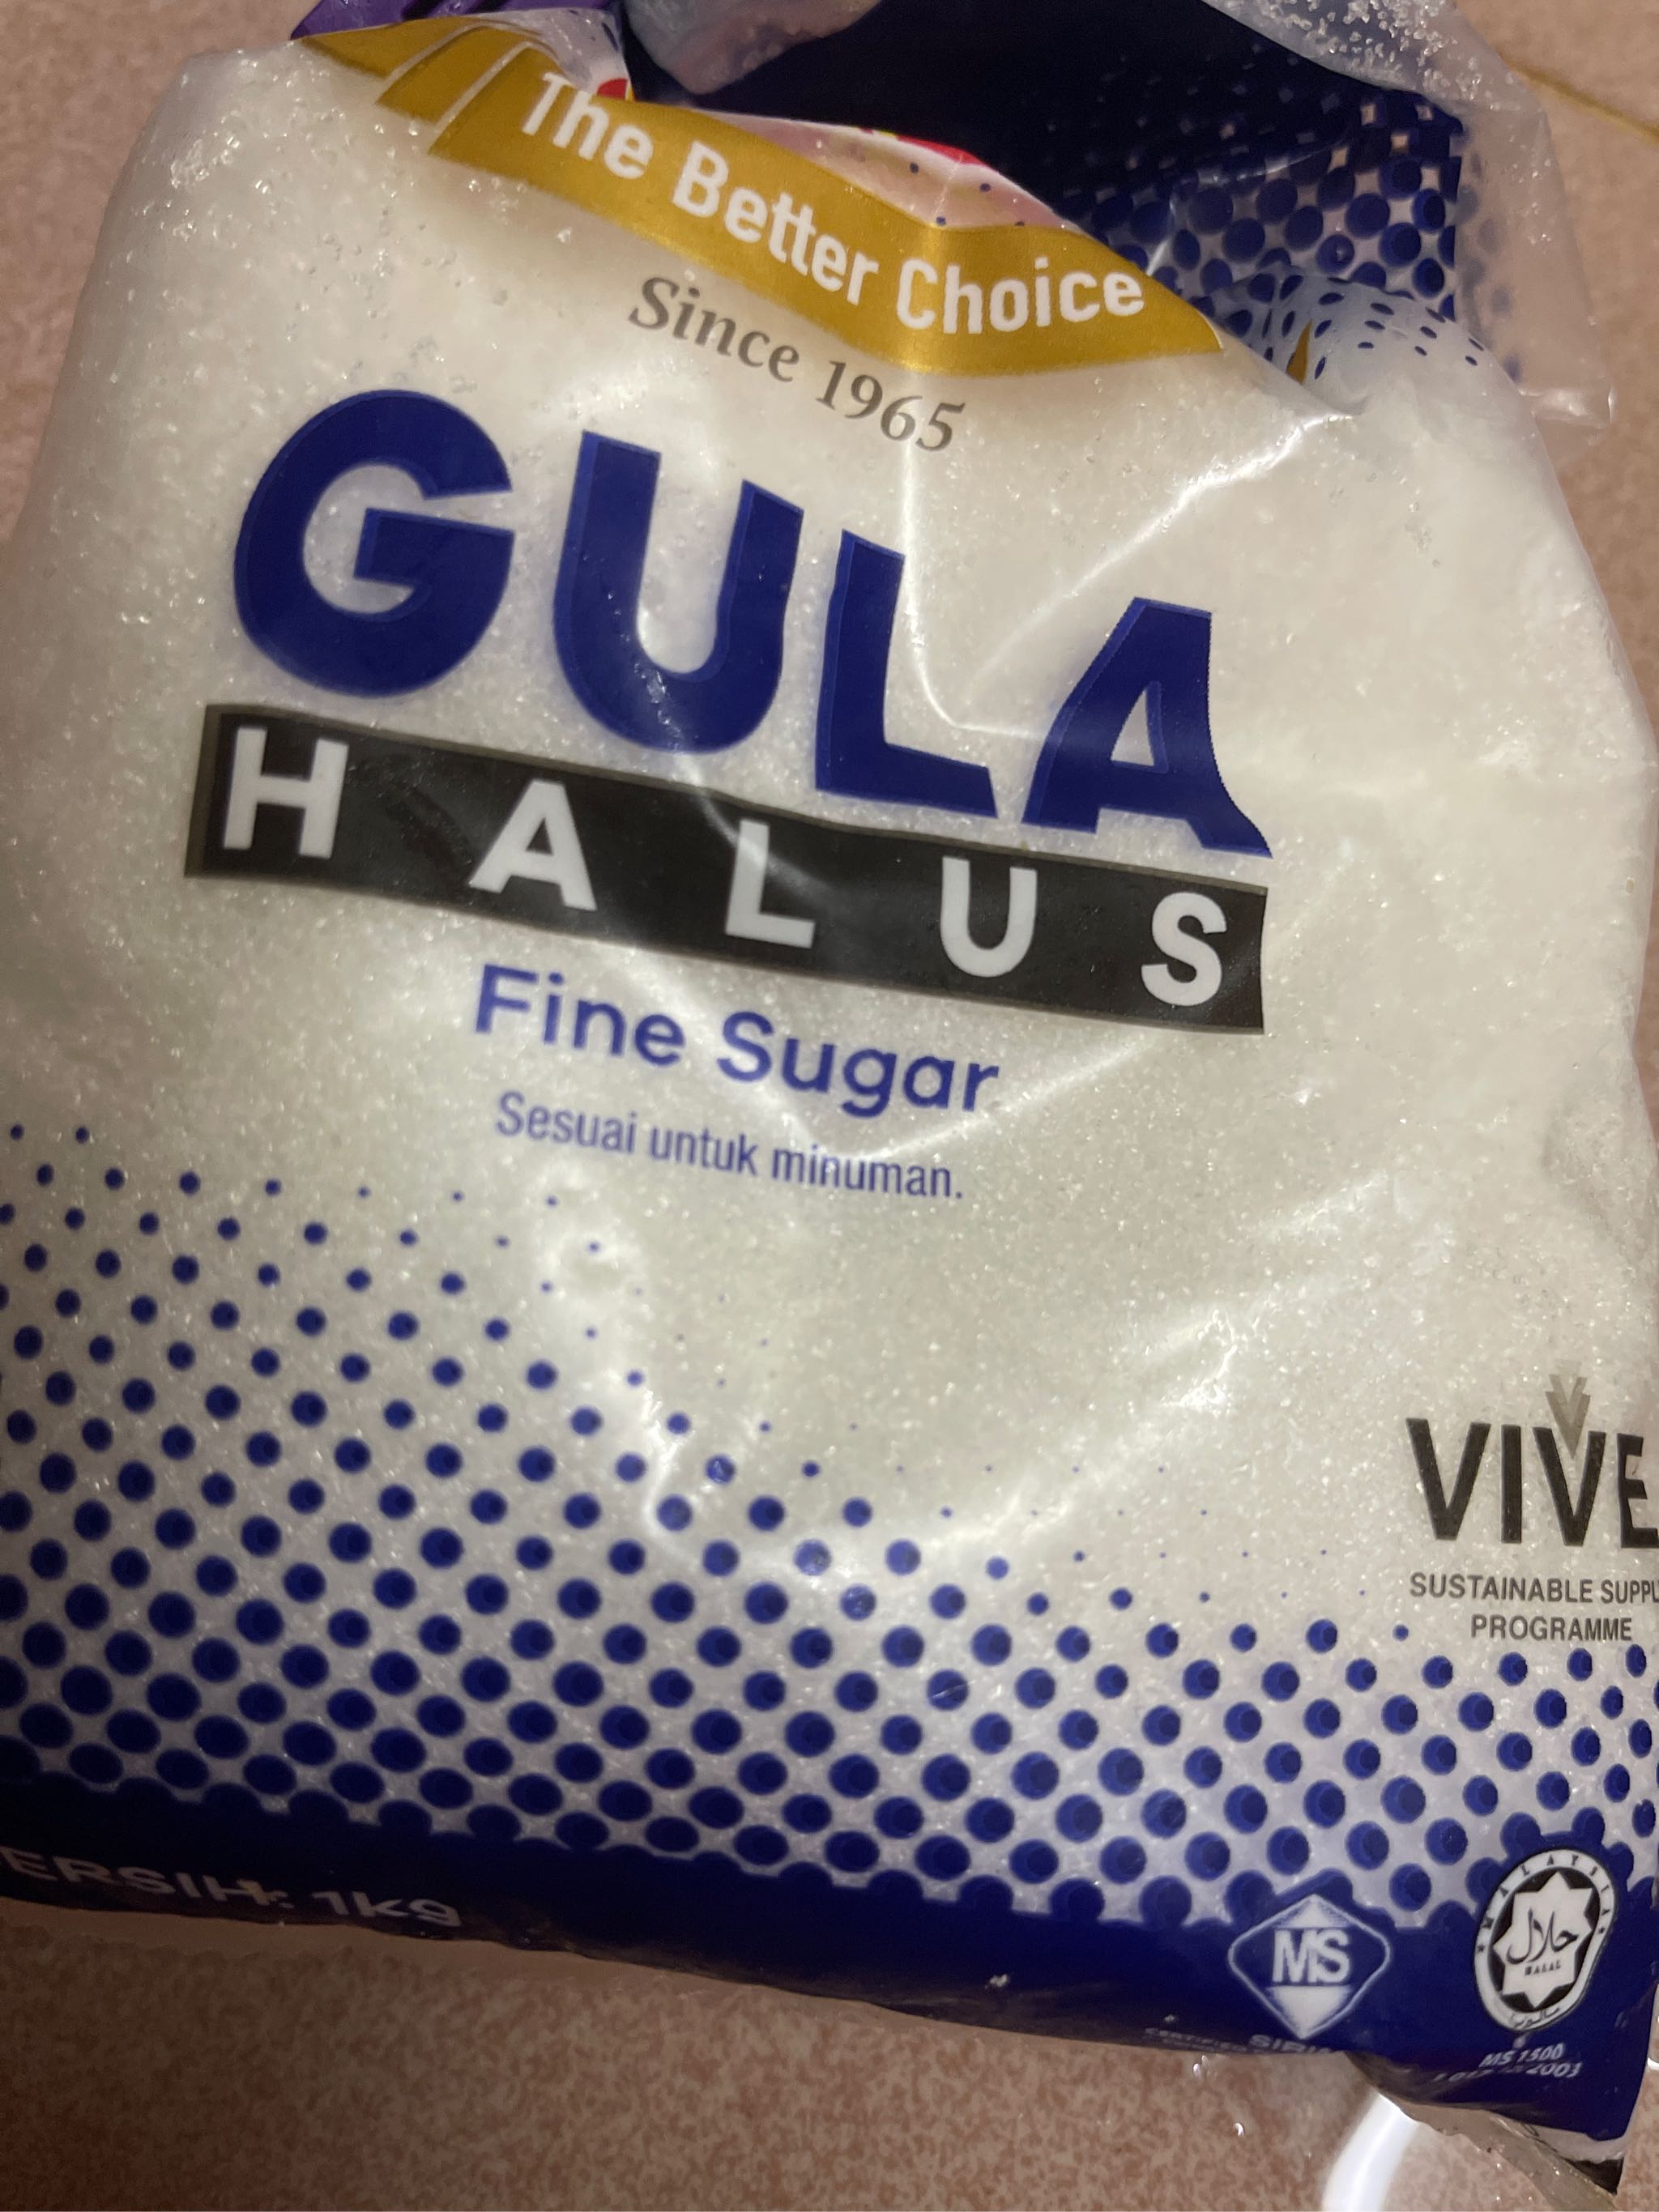 Gula halus csr